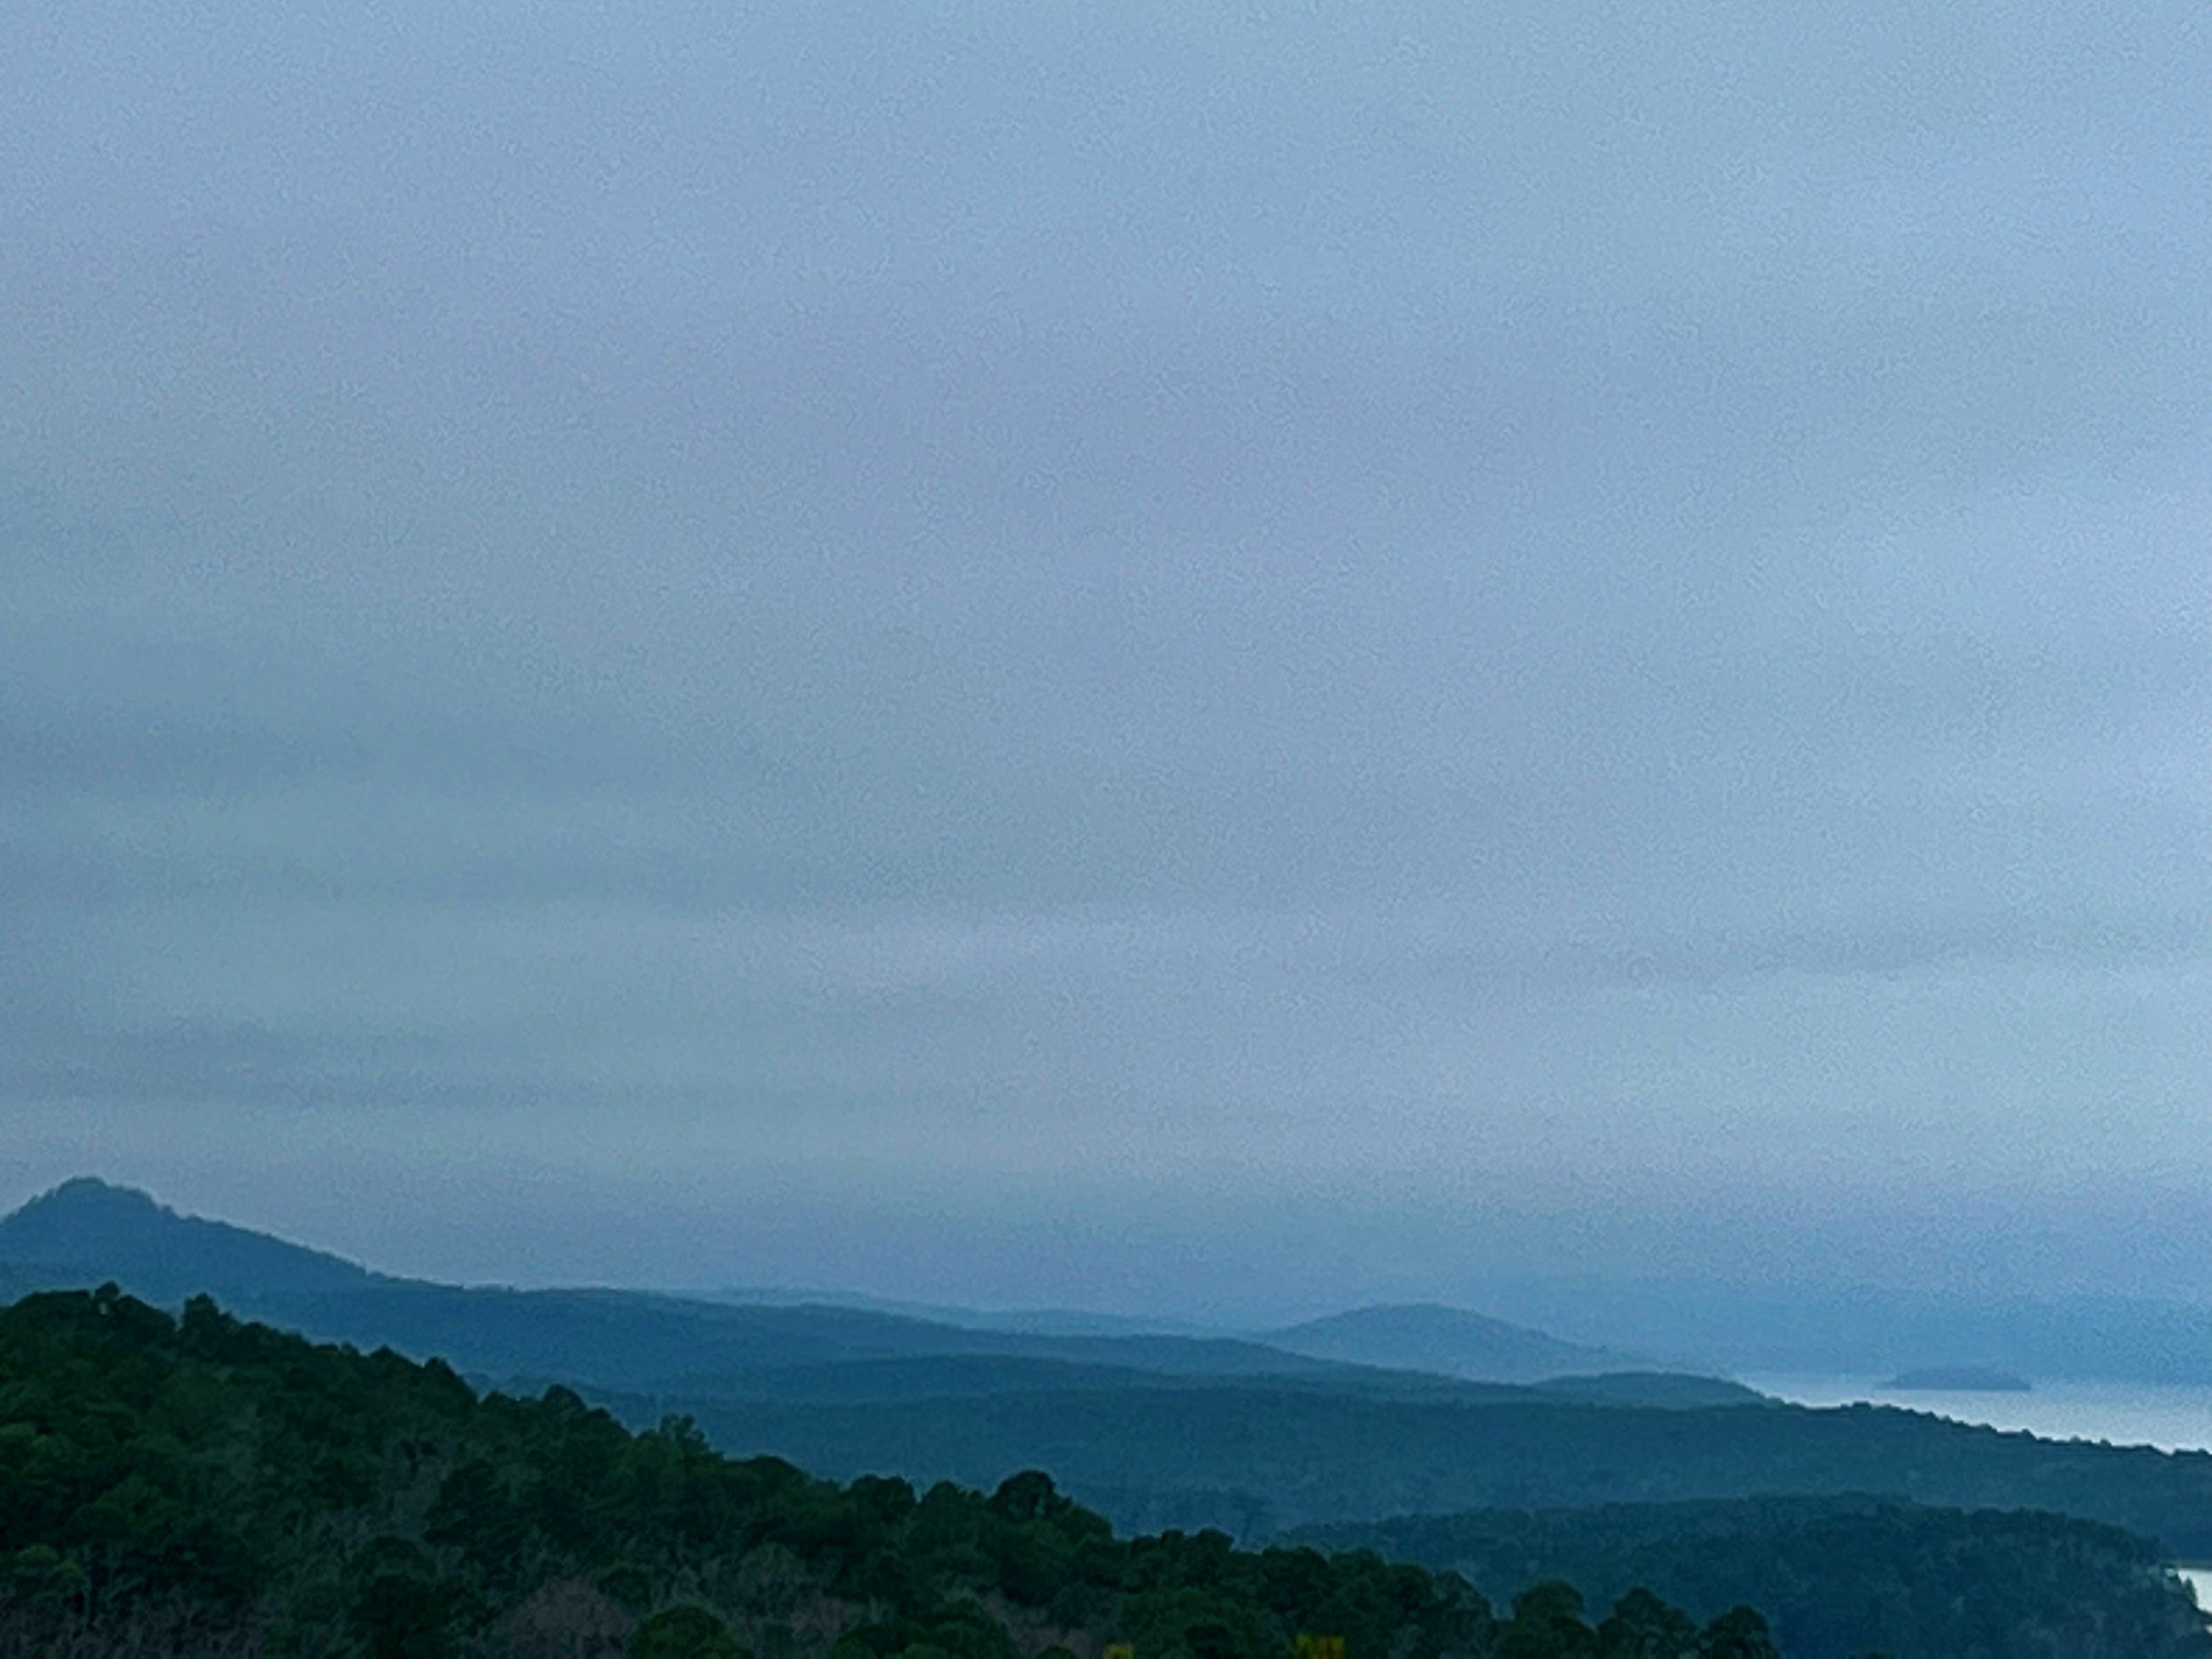 Rain and fog while on Pinnacle Mountain